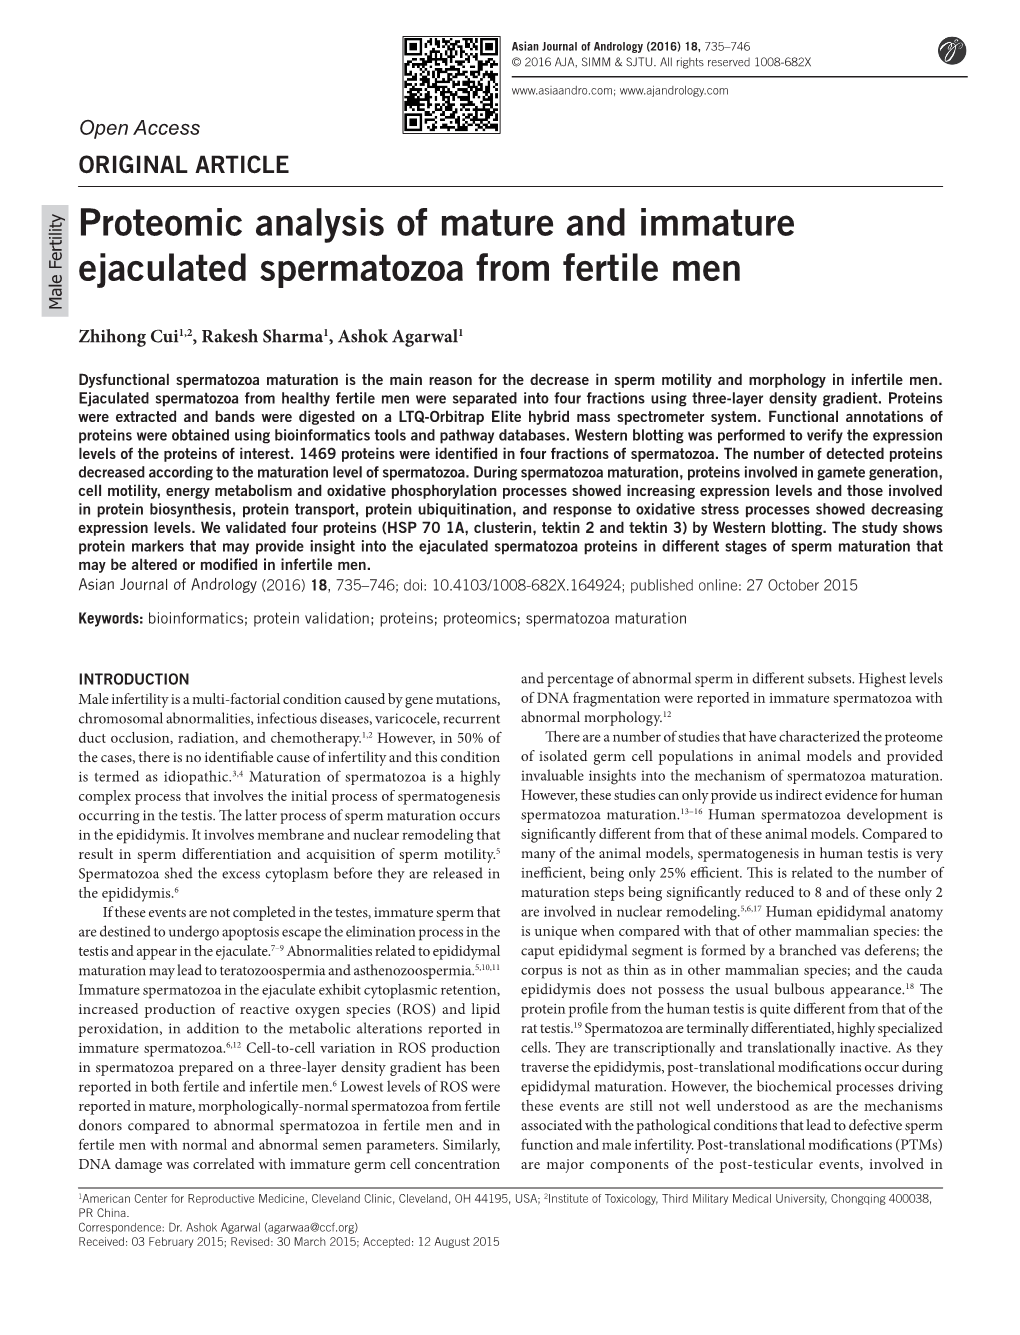 Proteomic Analysis of Mature and Immature Ejaculated Spermatozoa from Fertile Men Male Fertility